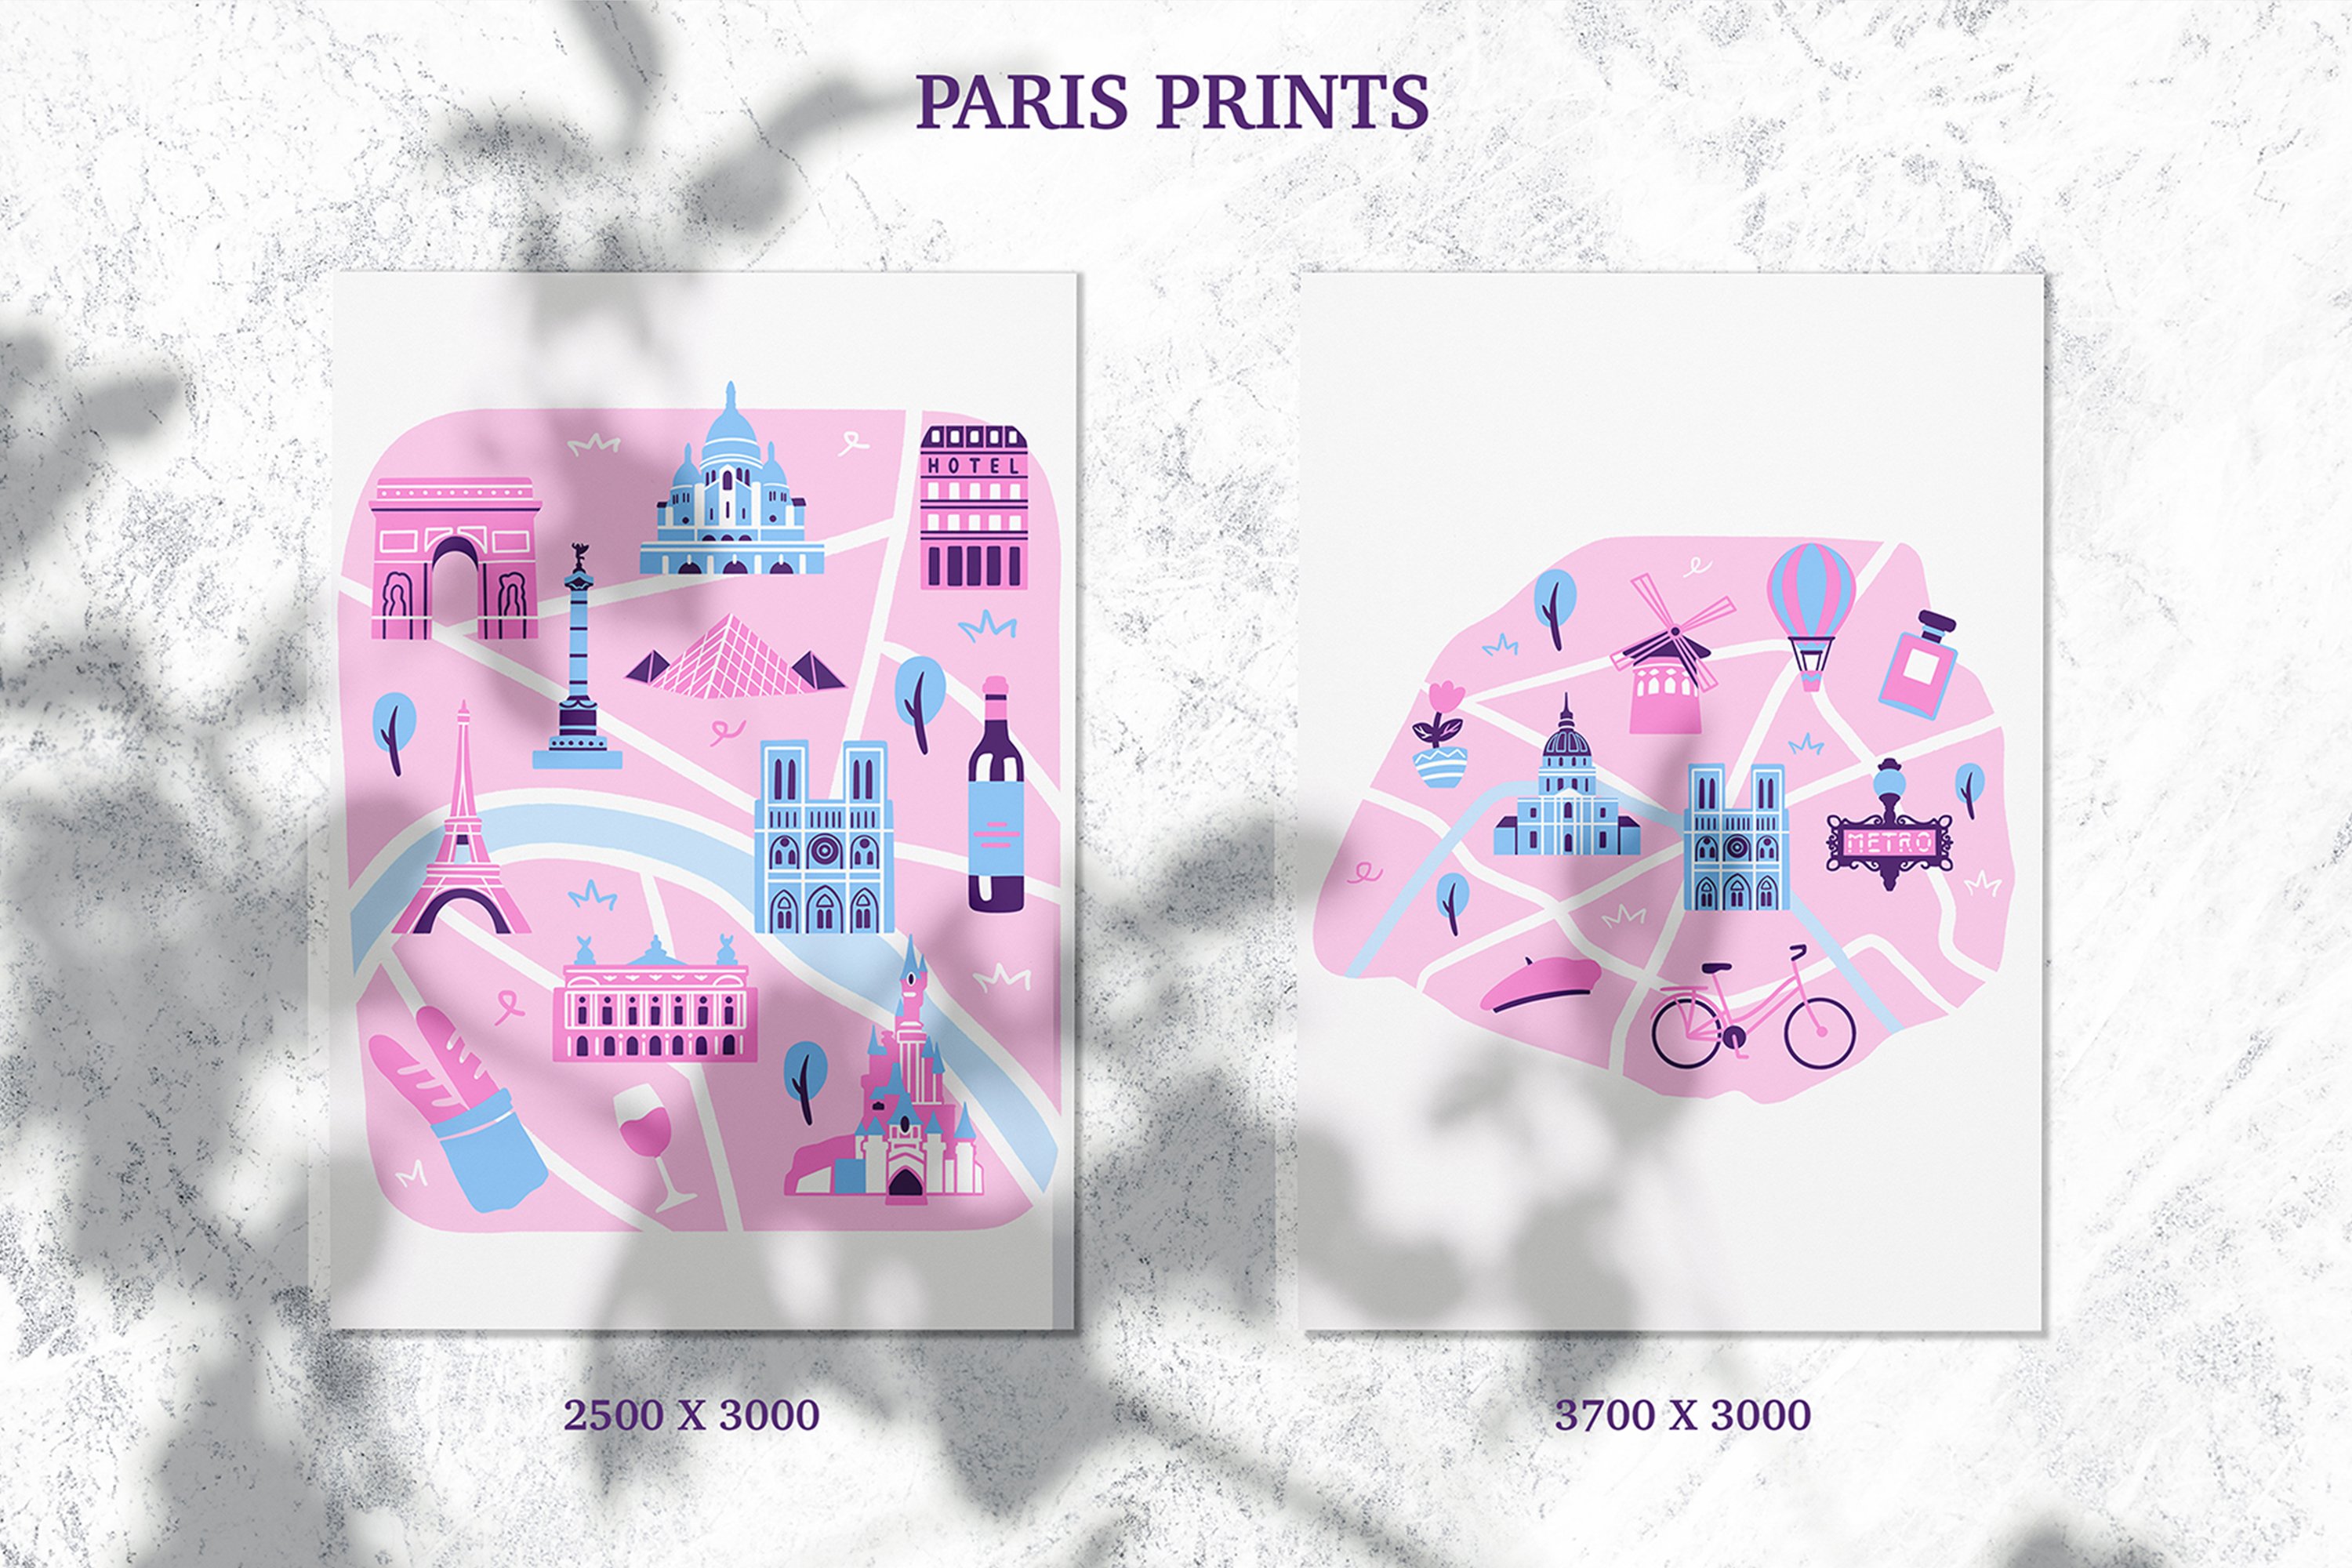 Paris Map Creator preview image.